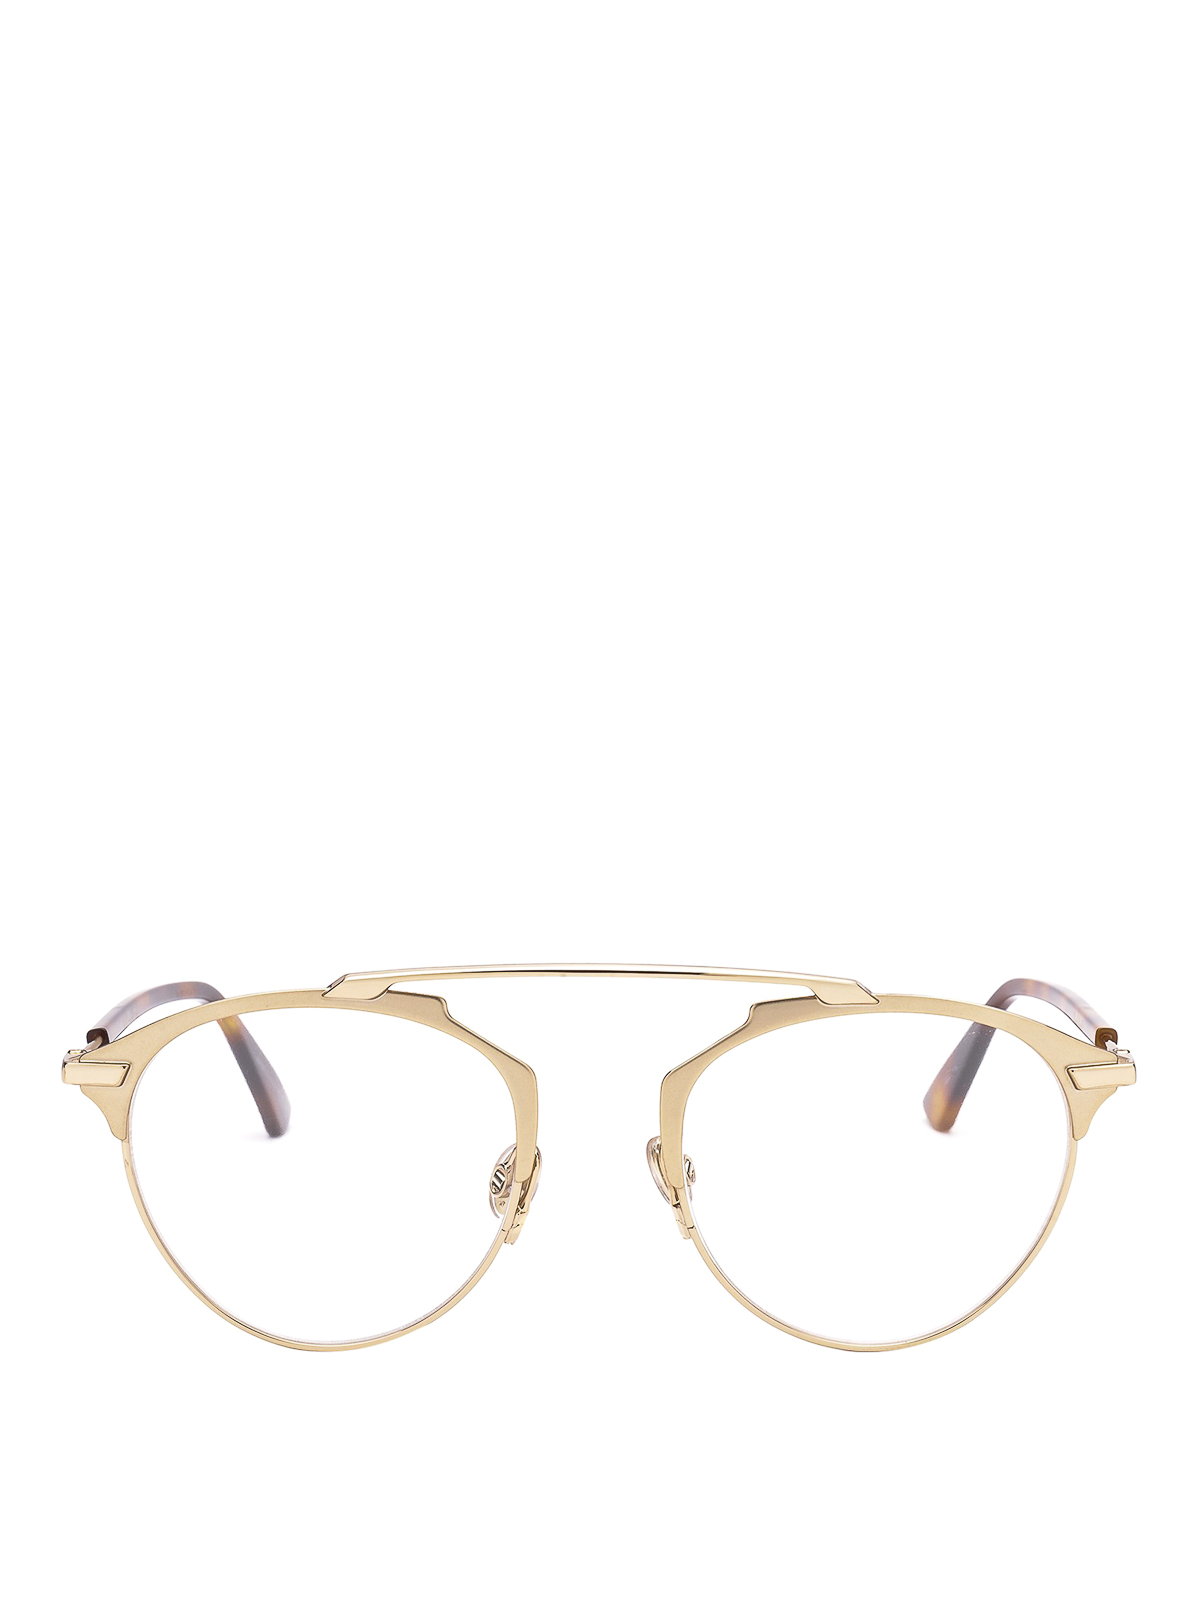 dior glasses gold